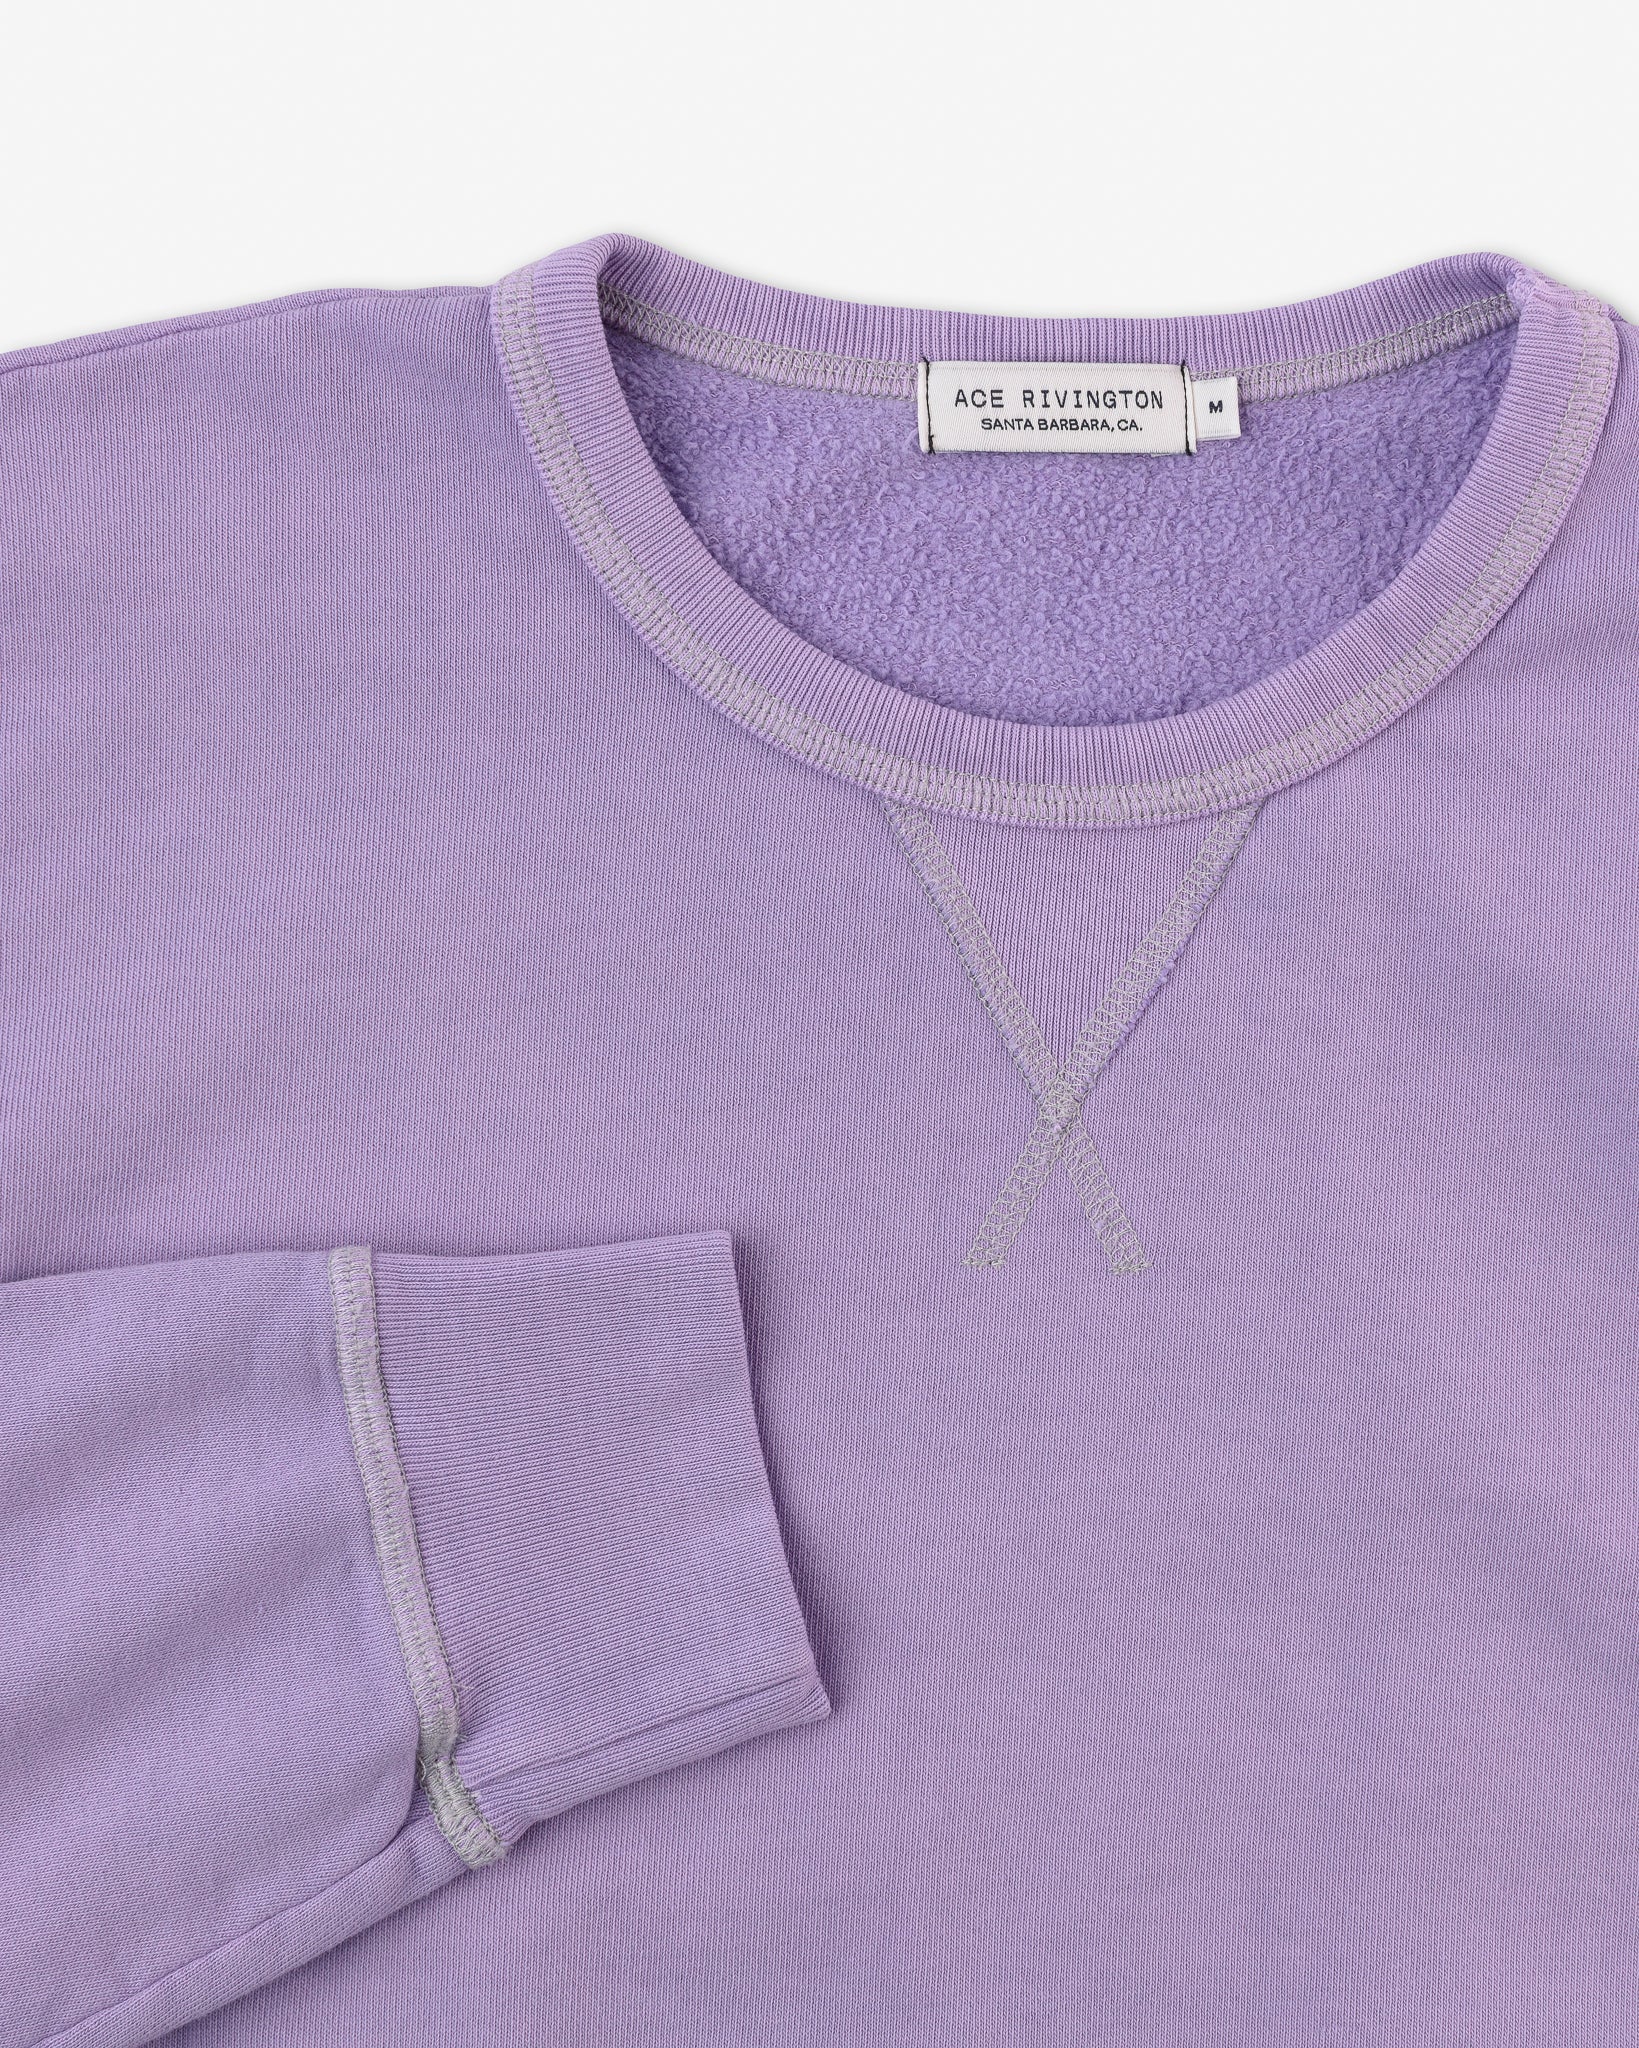 right sleeve set near collar of organic cotton sweatshirt in digital lavender